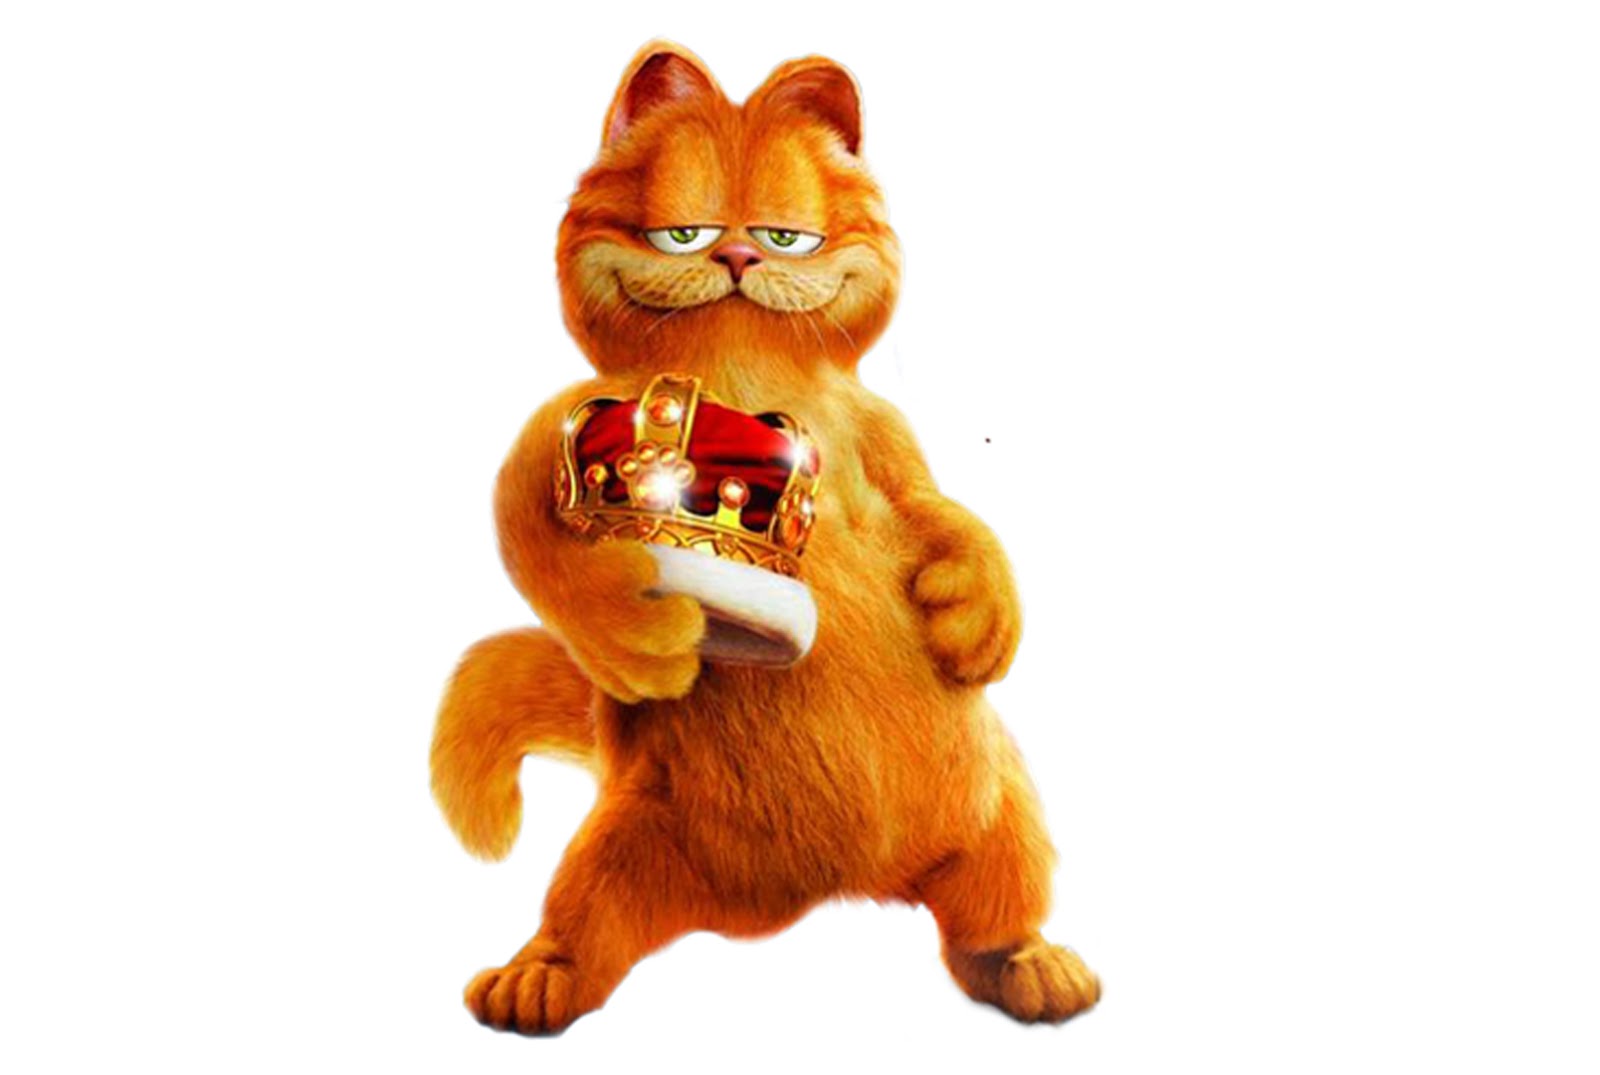 Wallpaper Lucu Gambar Kucing Garfield Terbaru 2016 Kata Kartun Anjing